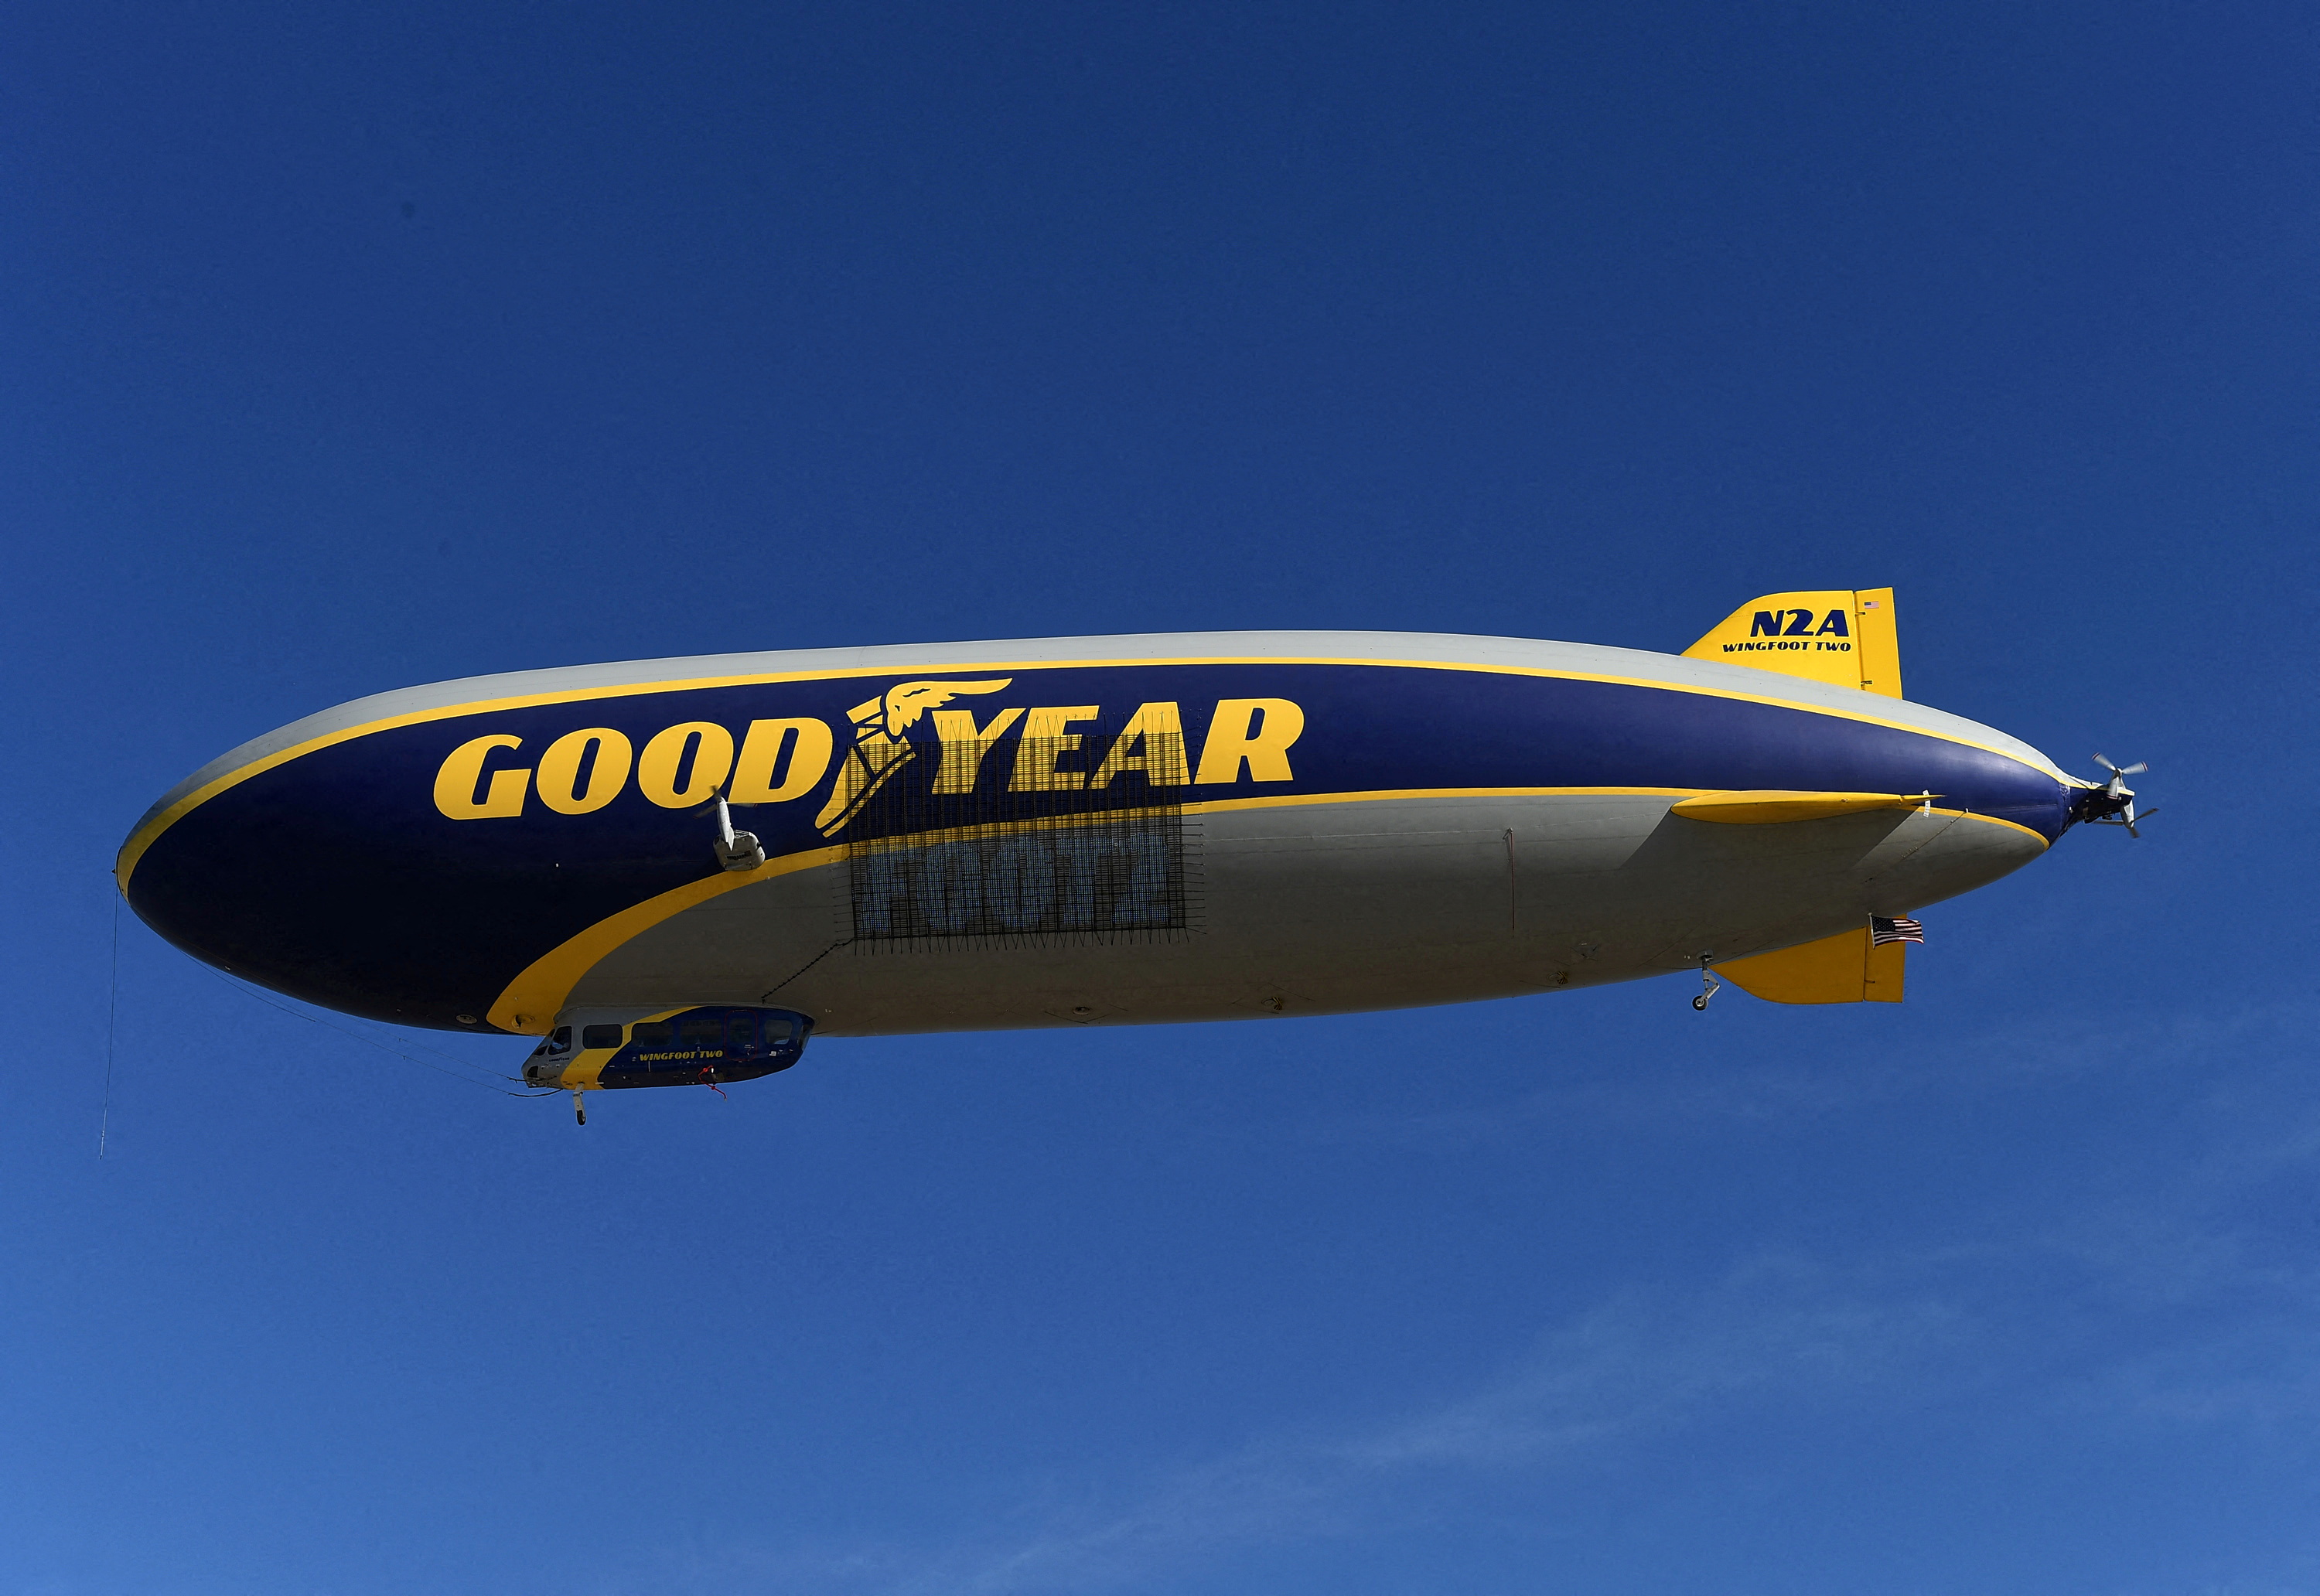 The Goodyear Airship 